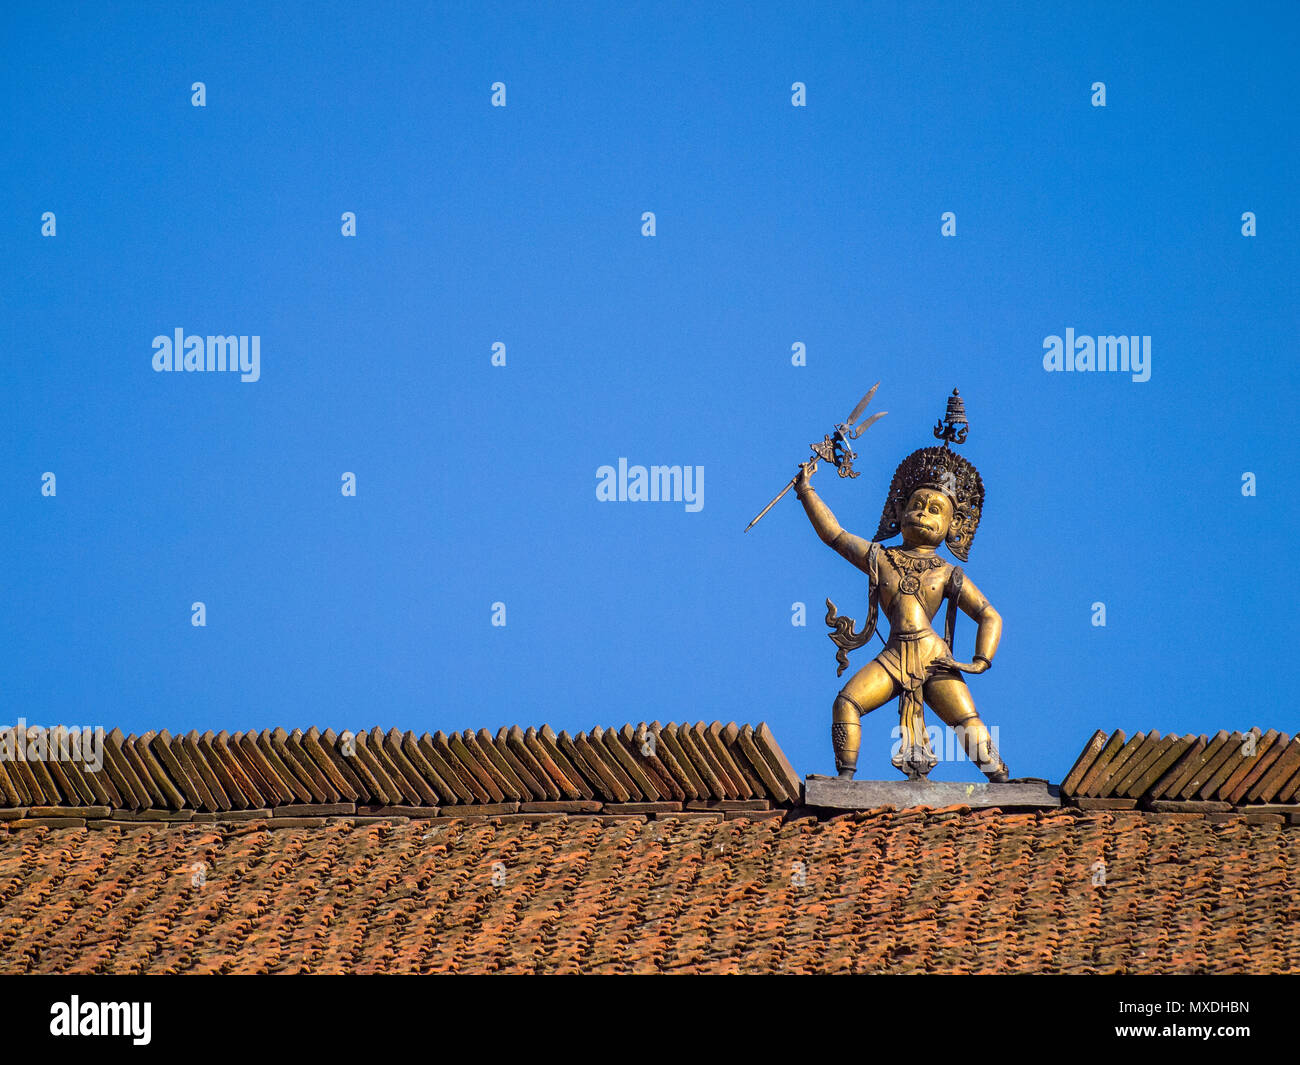 A statue of the Hindu deity Hanuman atop the Hanuman Dhoka, an old royal palace in Durbar Square, Patan, near Kathmandu, Nepal Stock Photo